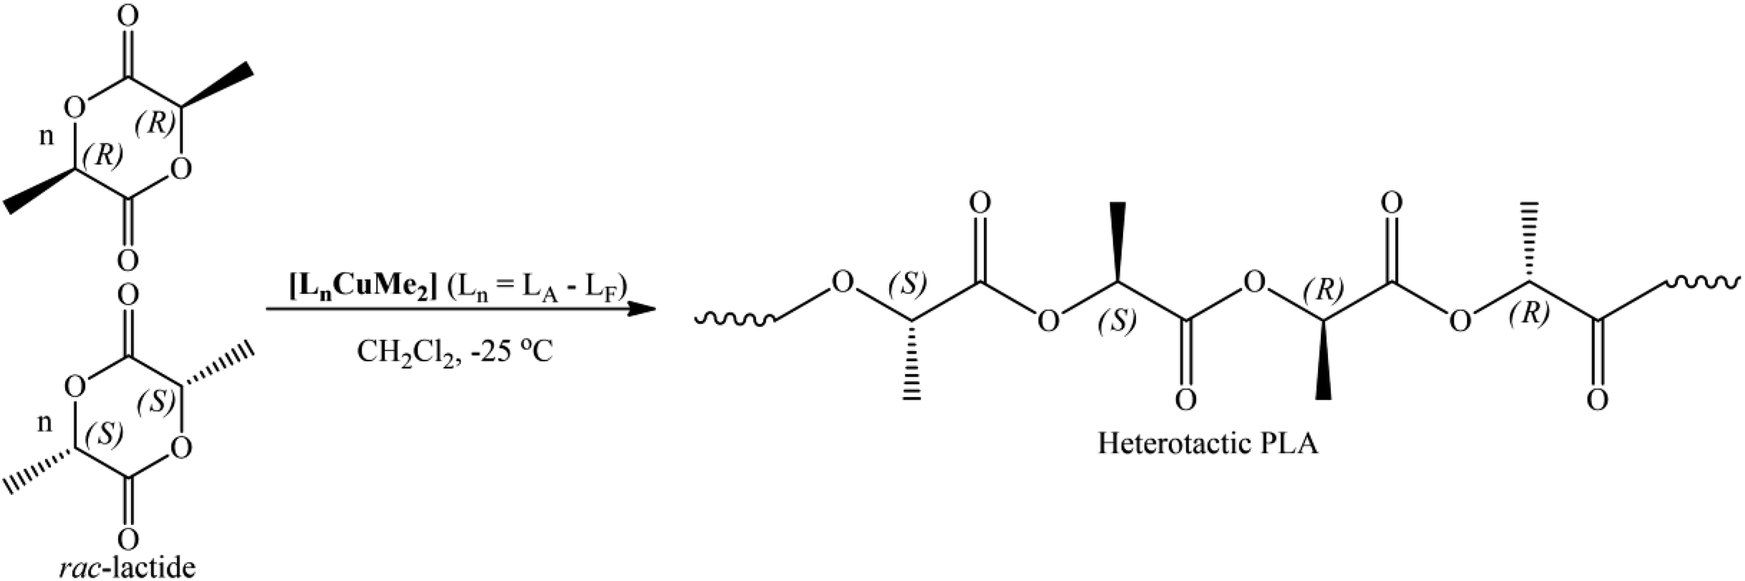 Stereoselective Polymerization Of Methyl Methacrylate And Rac Lactide Mediated By Iminomethylpyridine Based Cu Ii Complexes Rsc Advances Rsc Publishing Doi 10 1039 D0rab